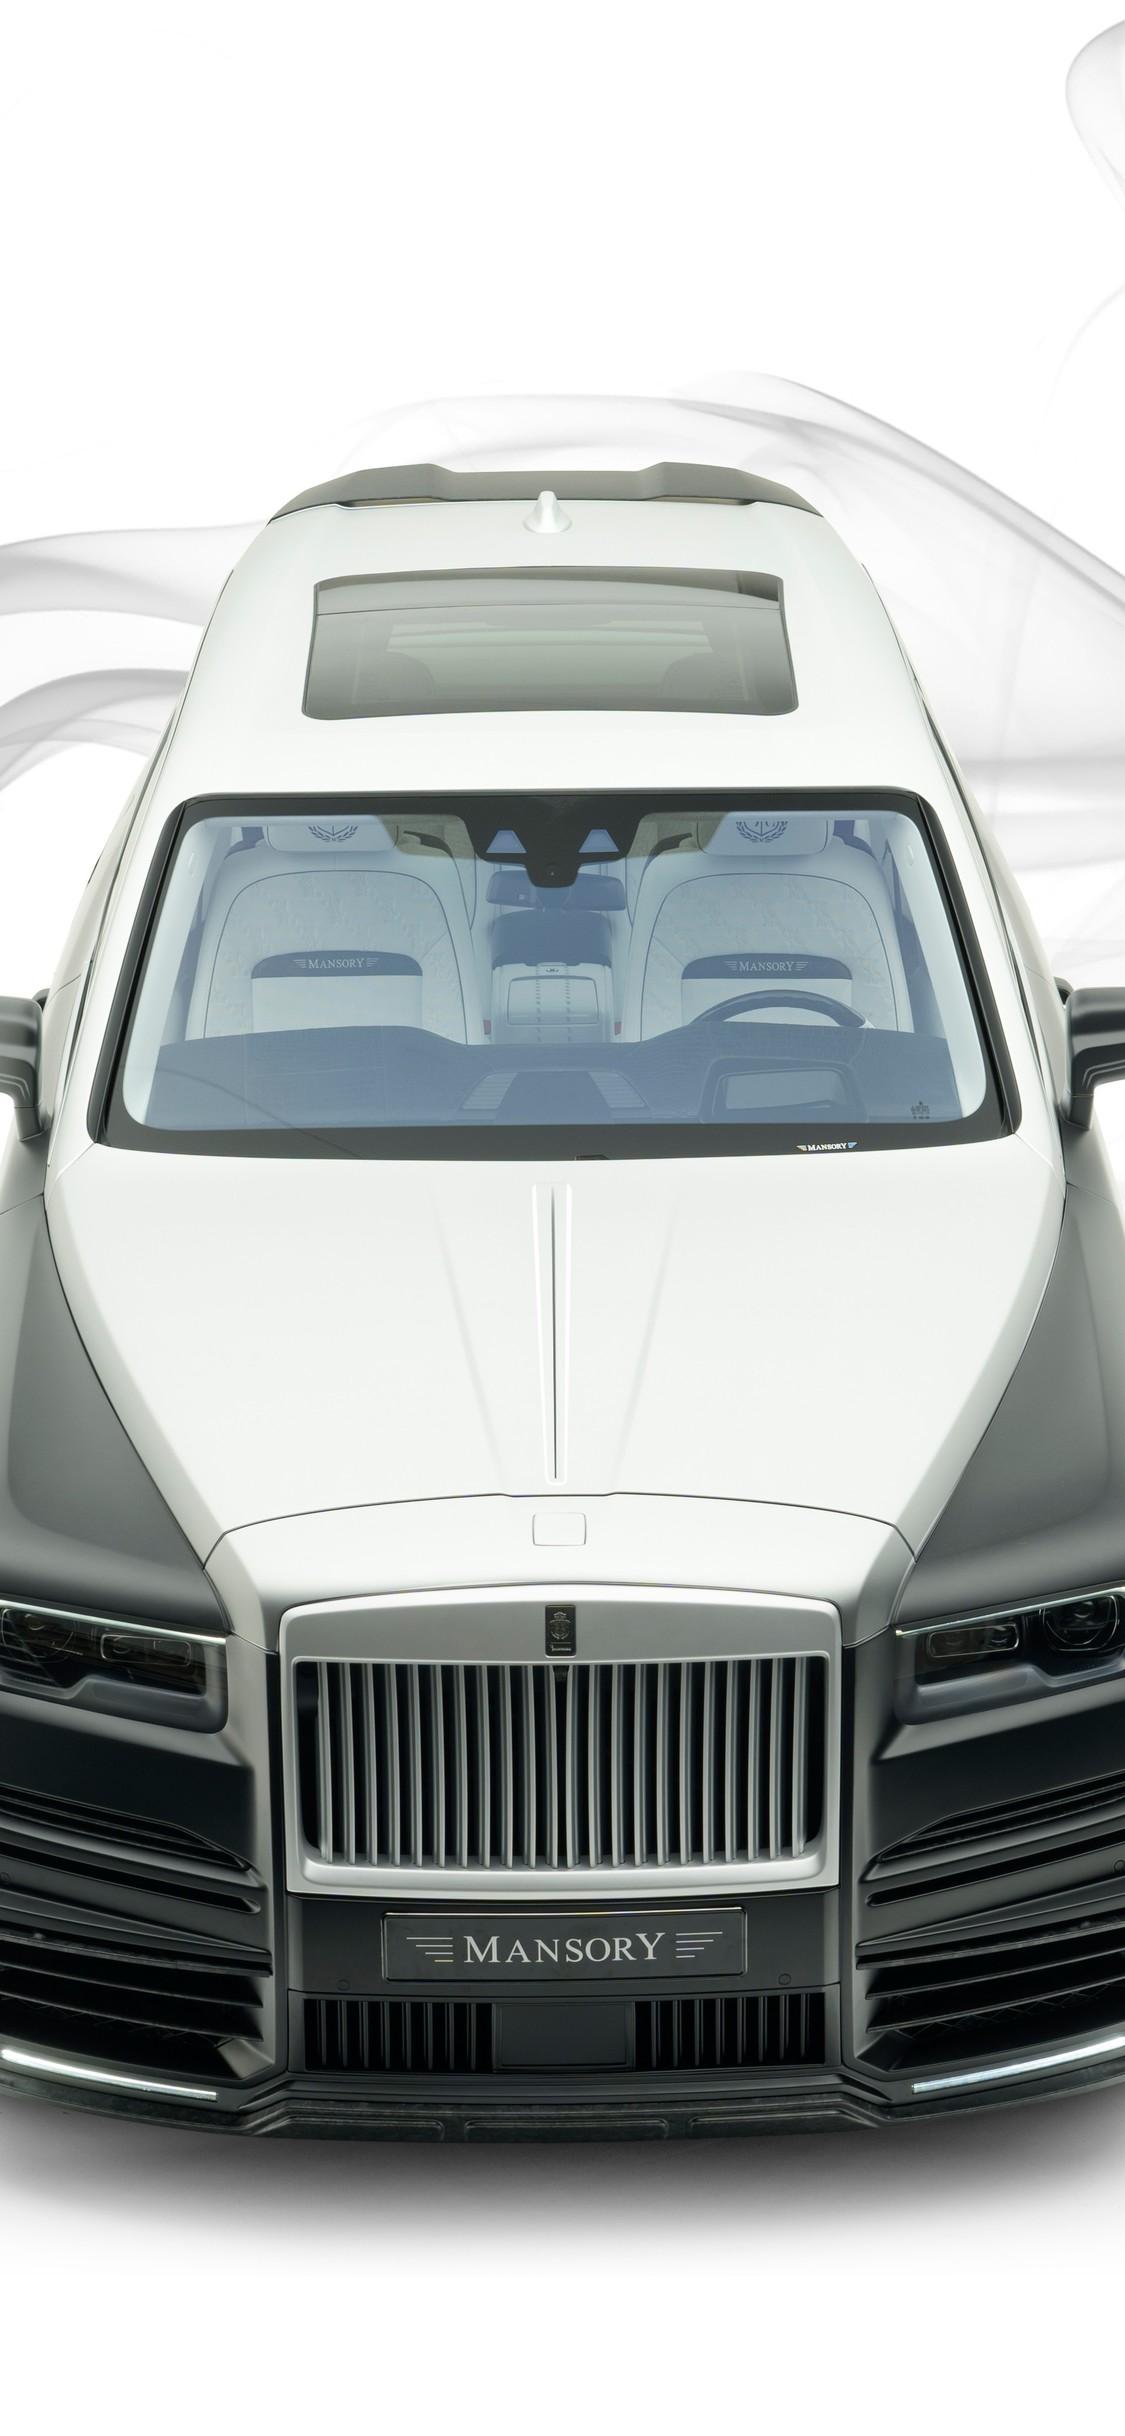 Rolls Royce Mansory Billionaire 2019 iPhone XS, iPhone 10